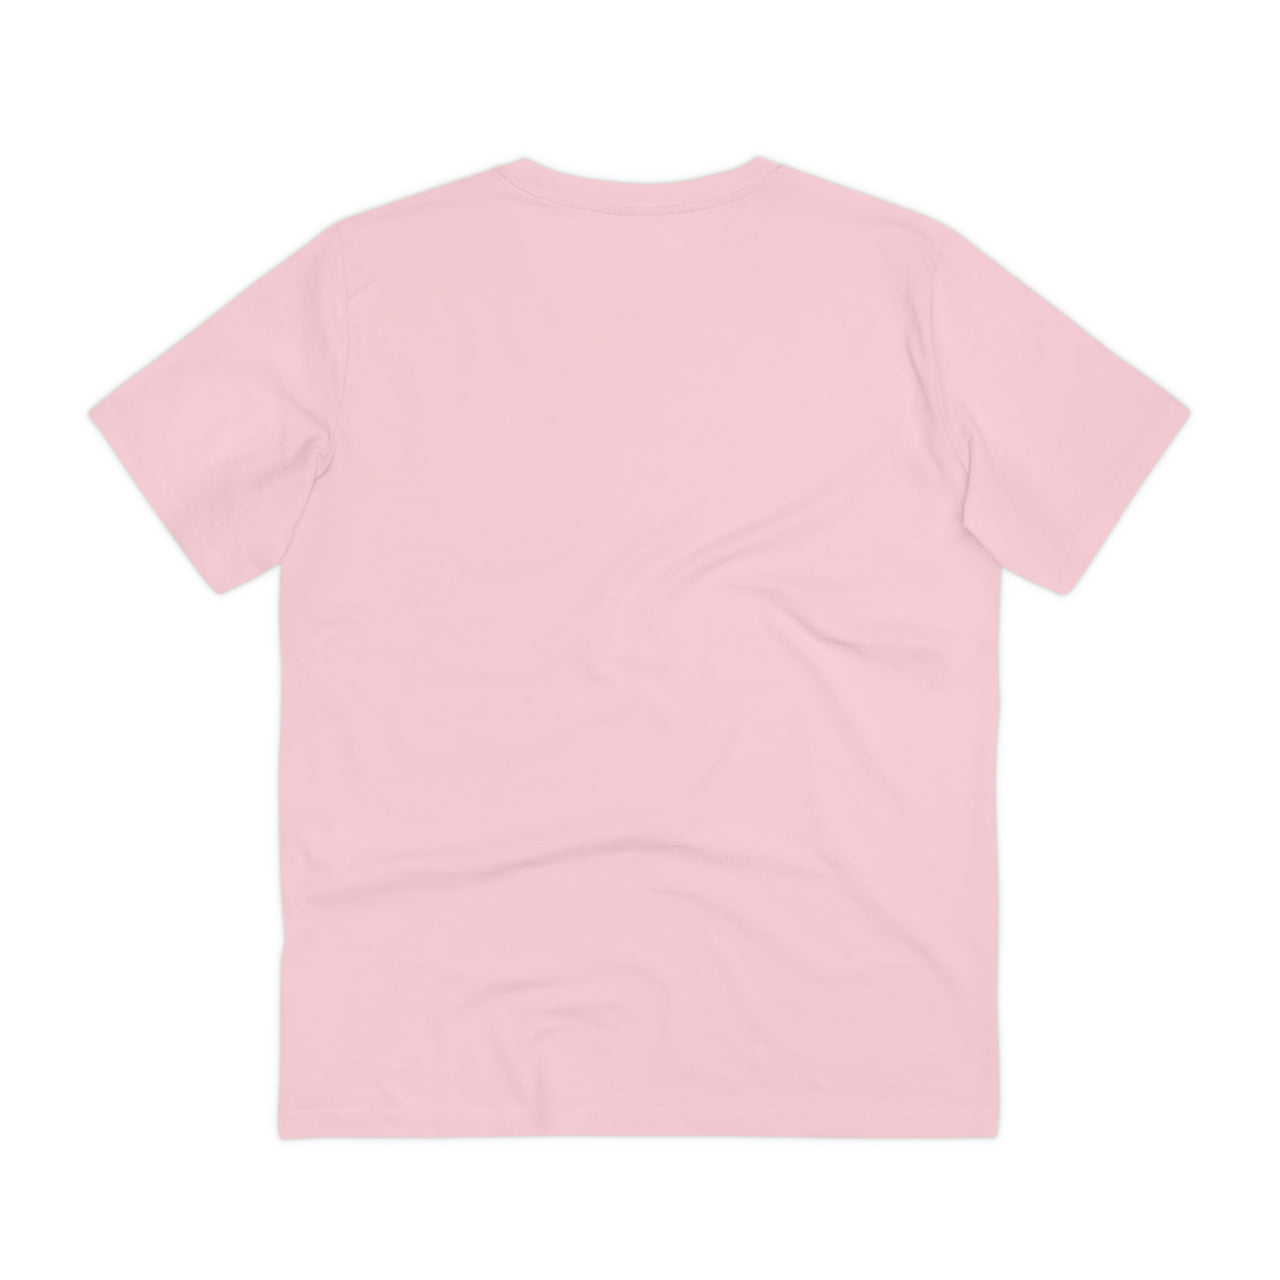 Bear Pride Flag T-shirt Unisex Size - #1 Word's Gayest Dad Printify